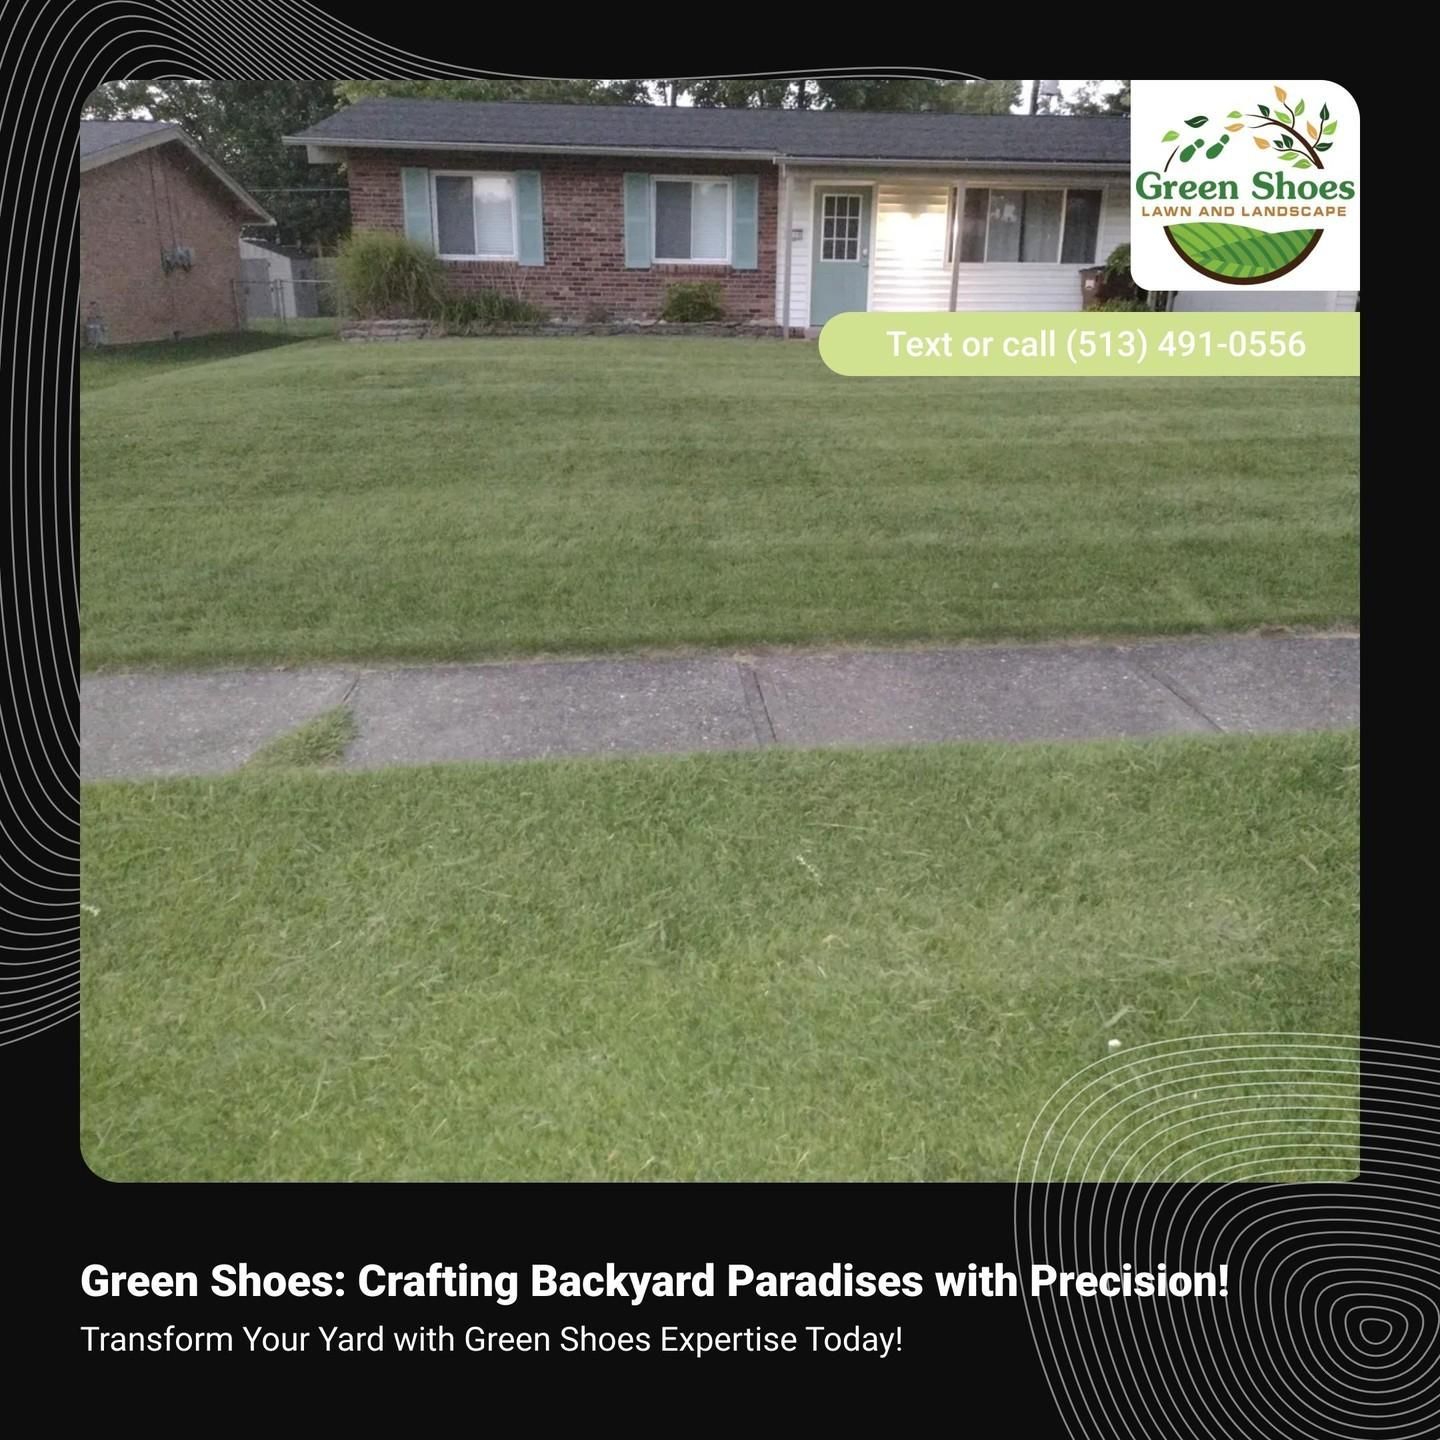 instagram for Green Shoes Lawn & Landscape in Cincinnati, OH